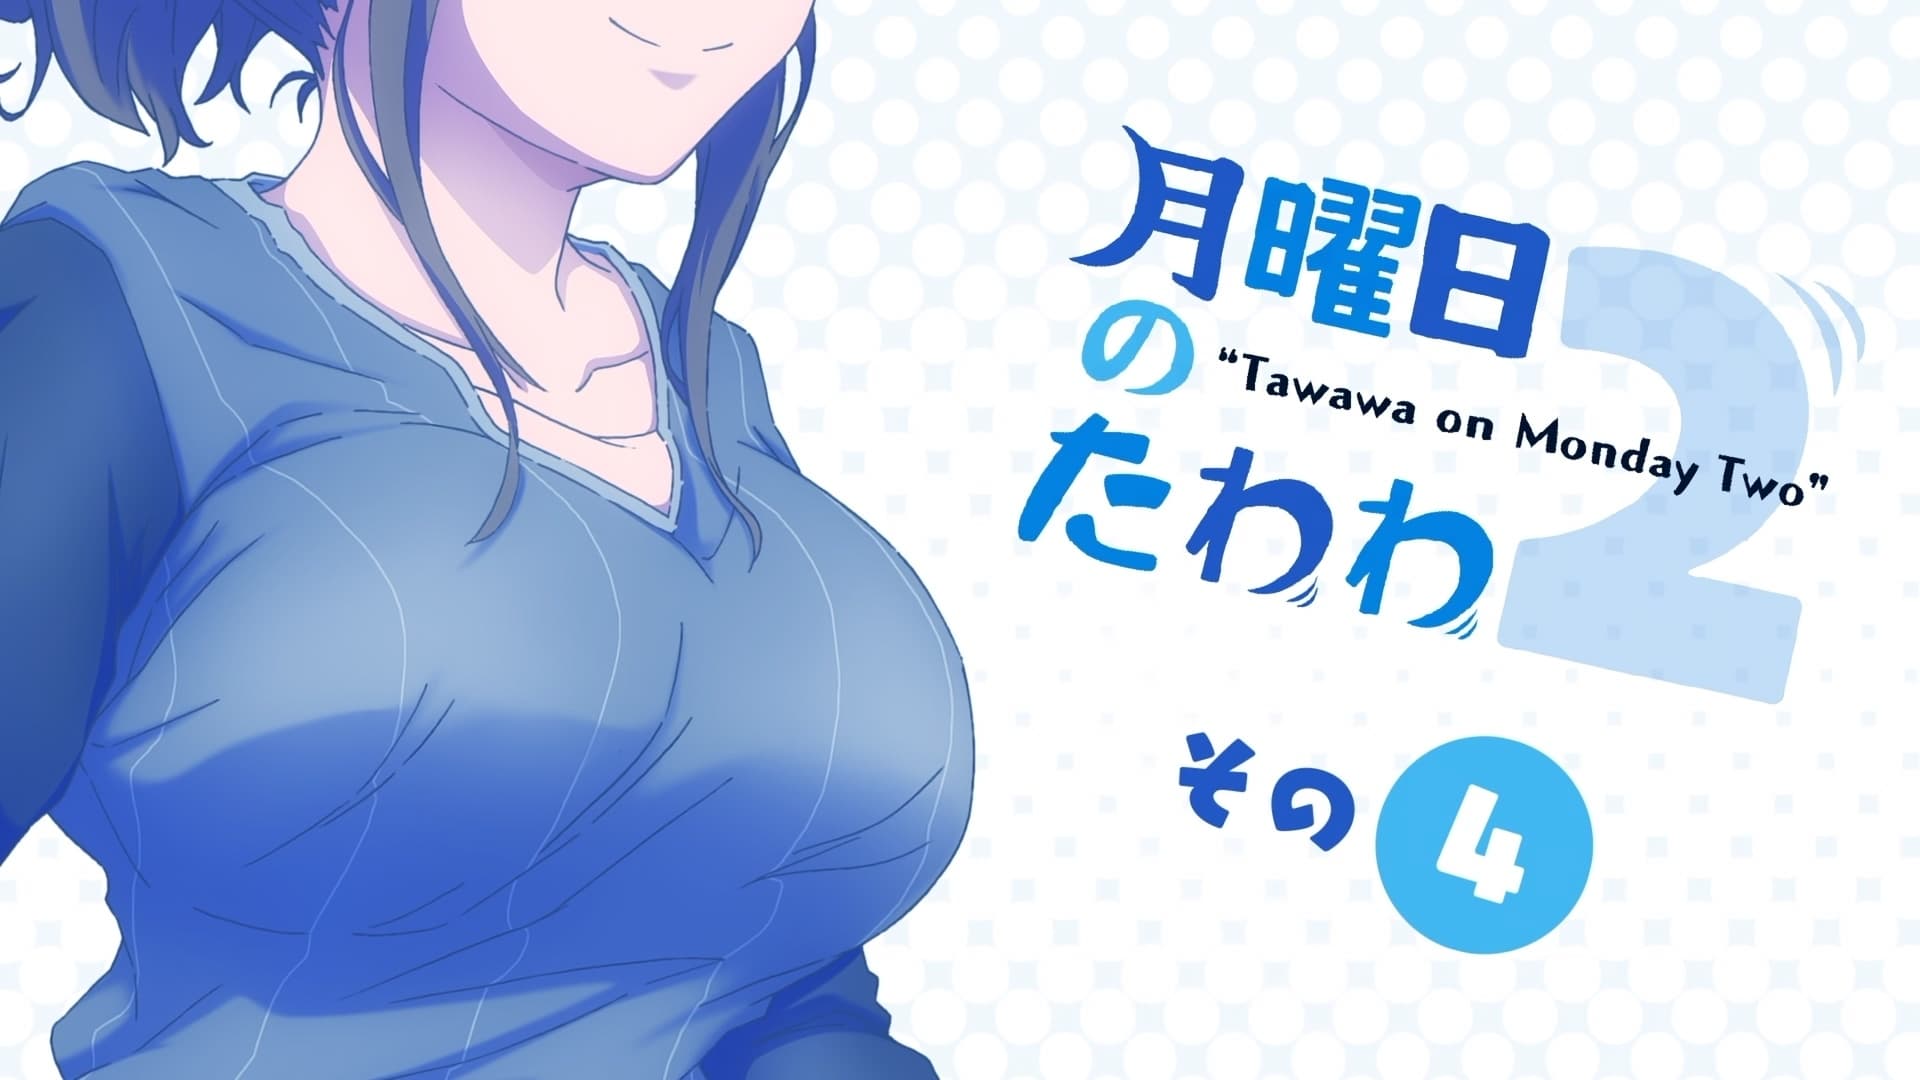 Watch Tawawa on Monday · Season 2 Full Episodes Online - Plex